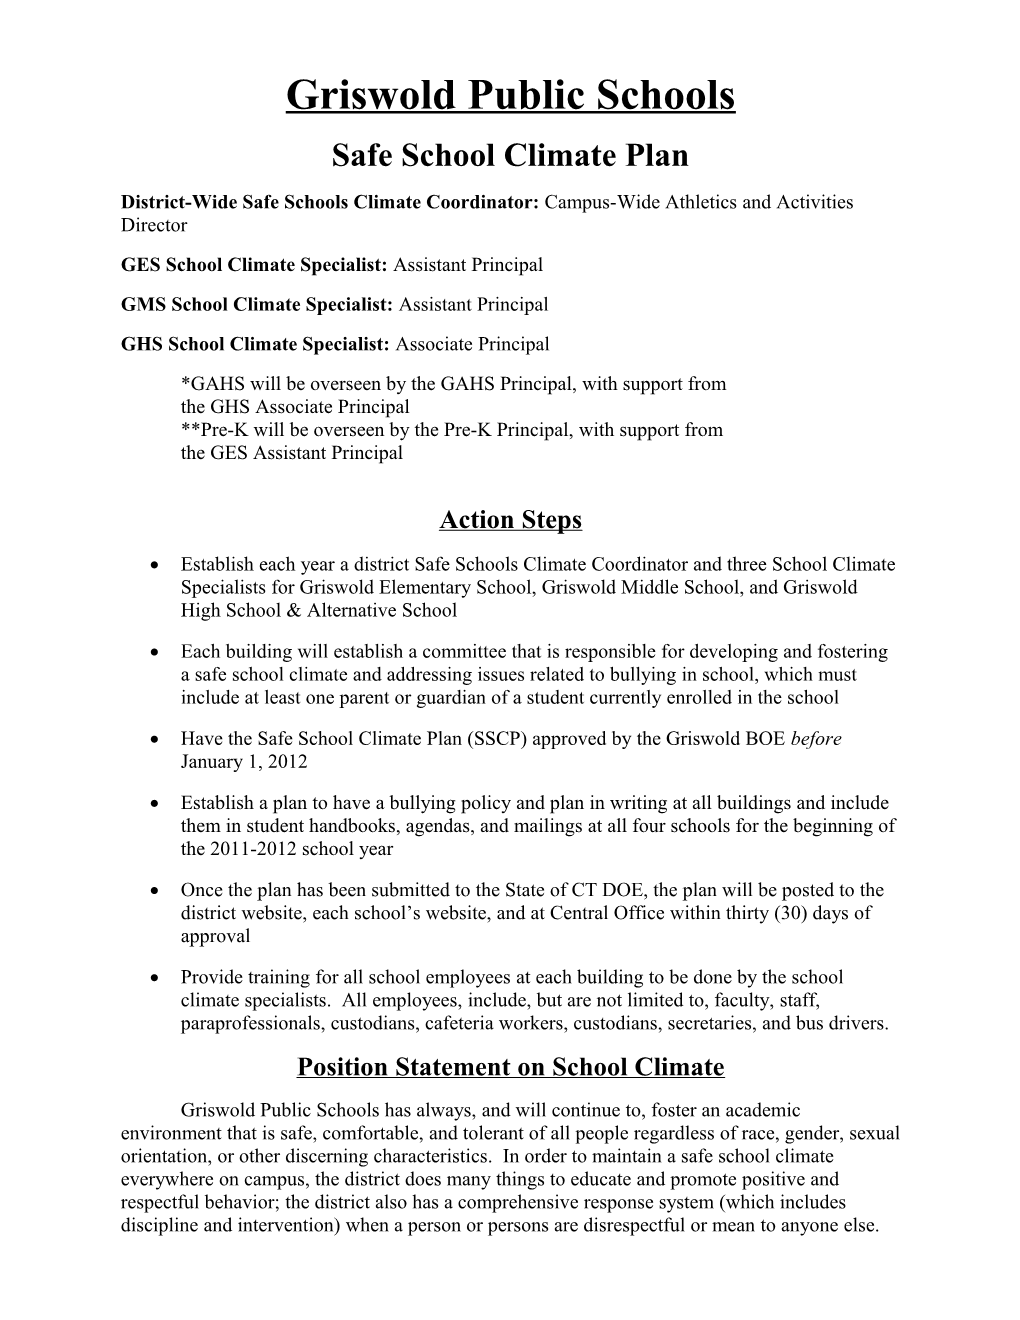 Safe School Climate Plan